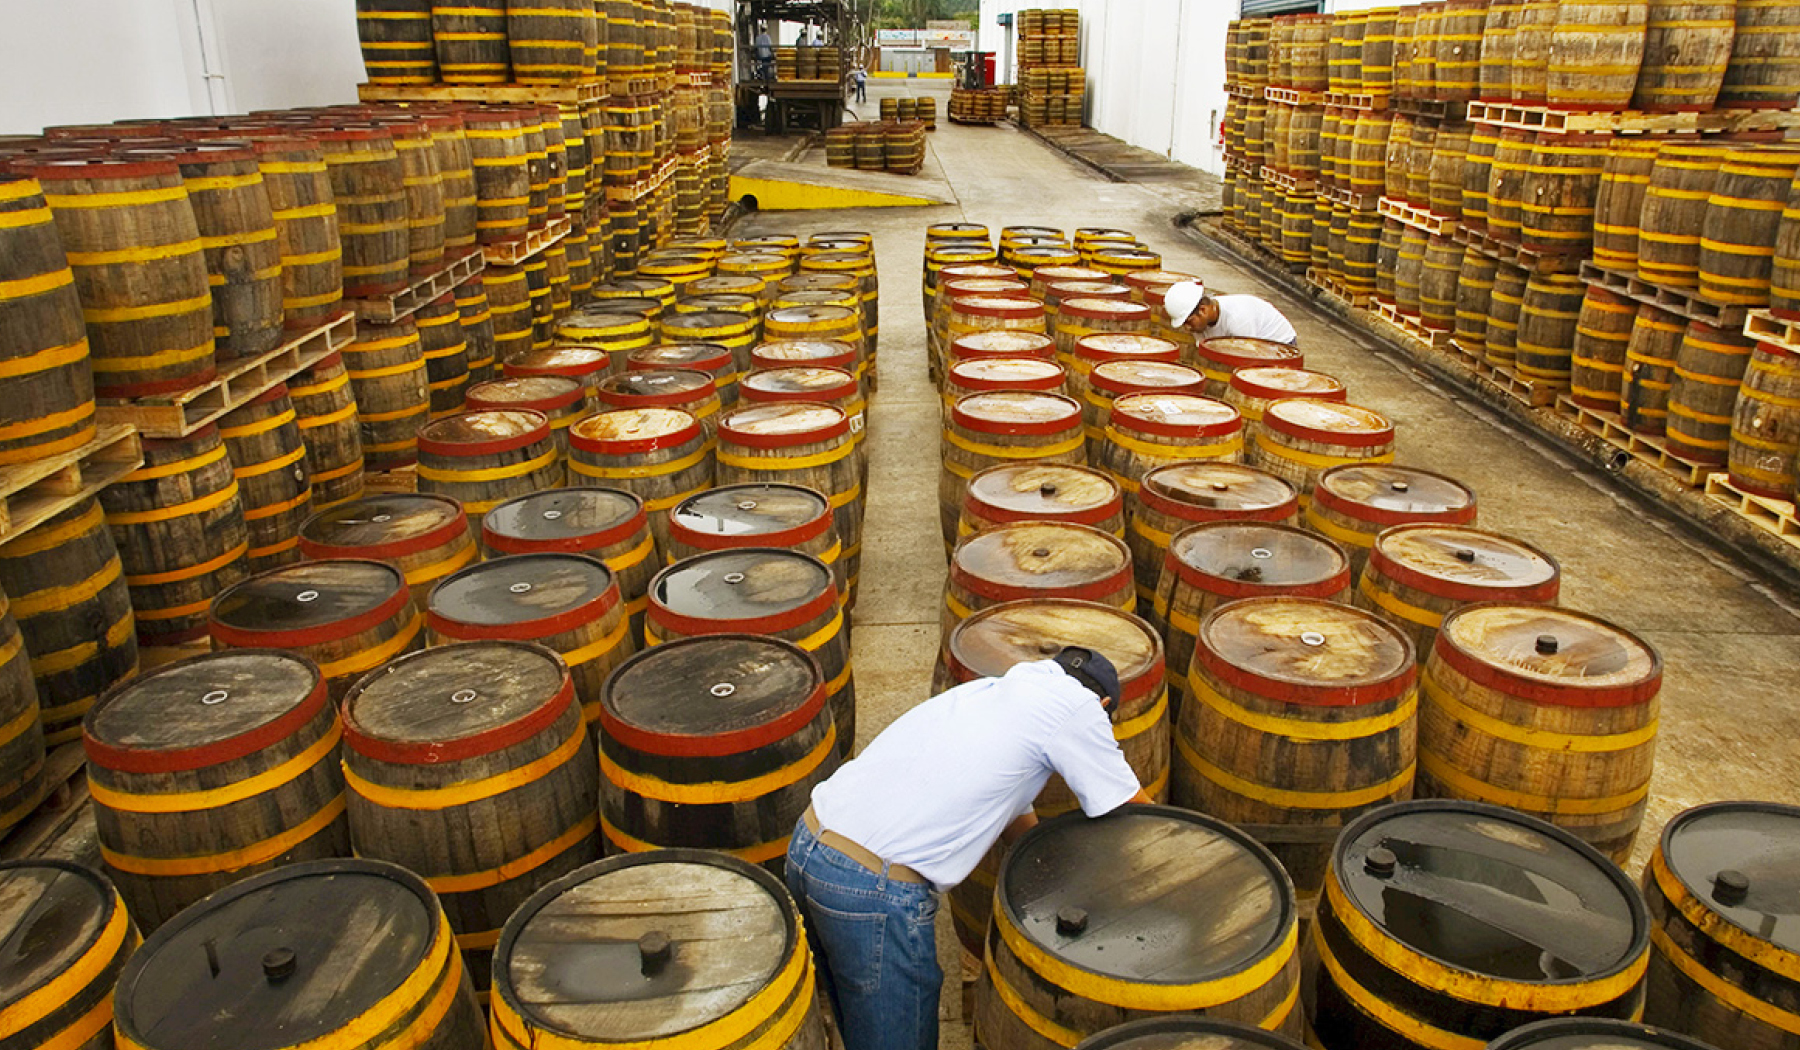 Brugal Rum Factory